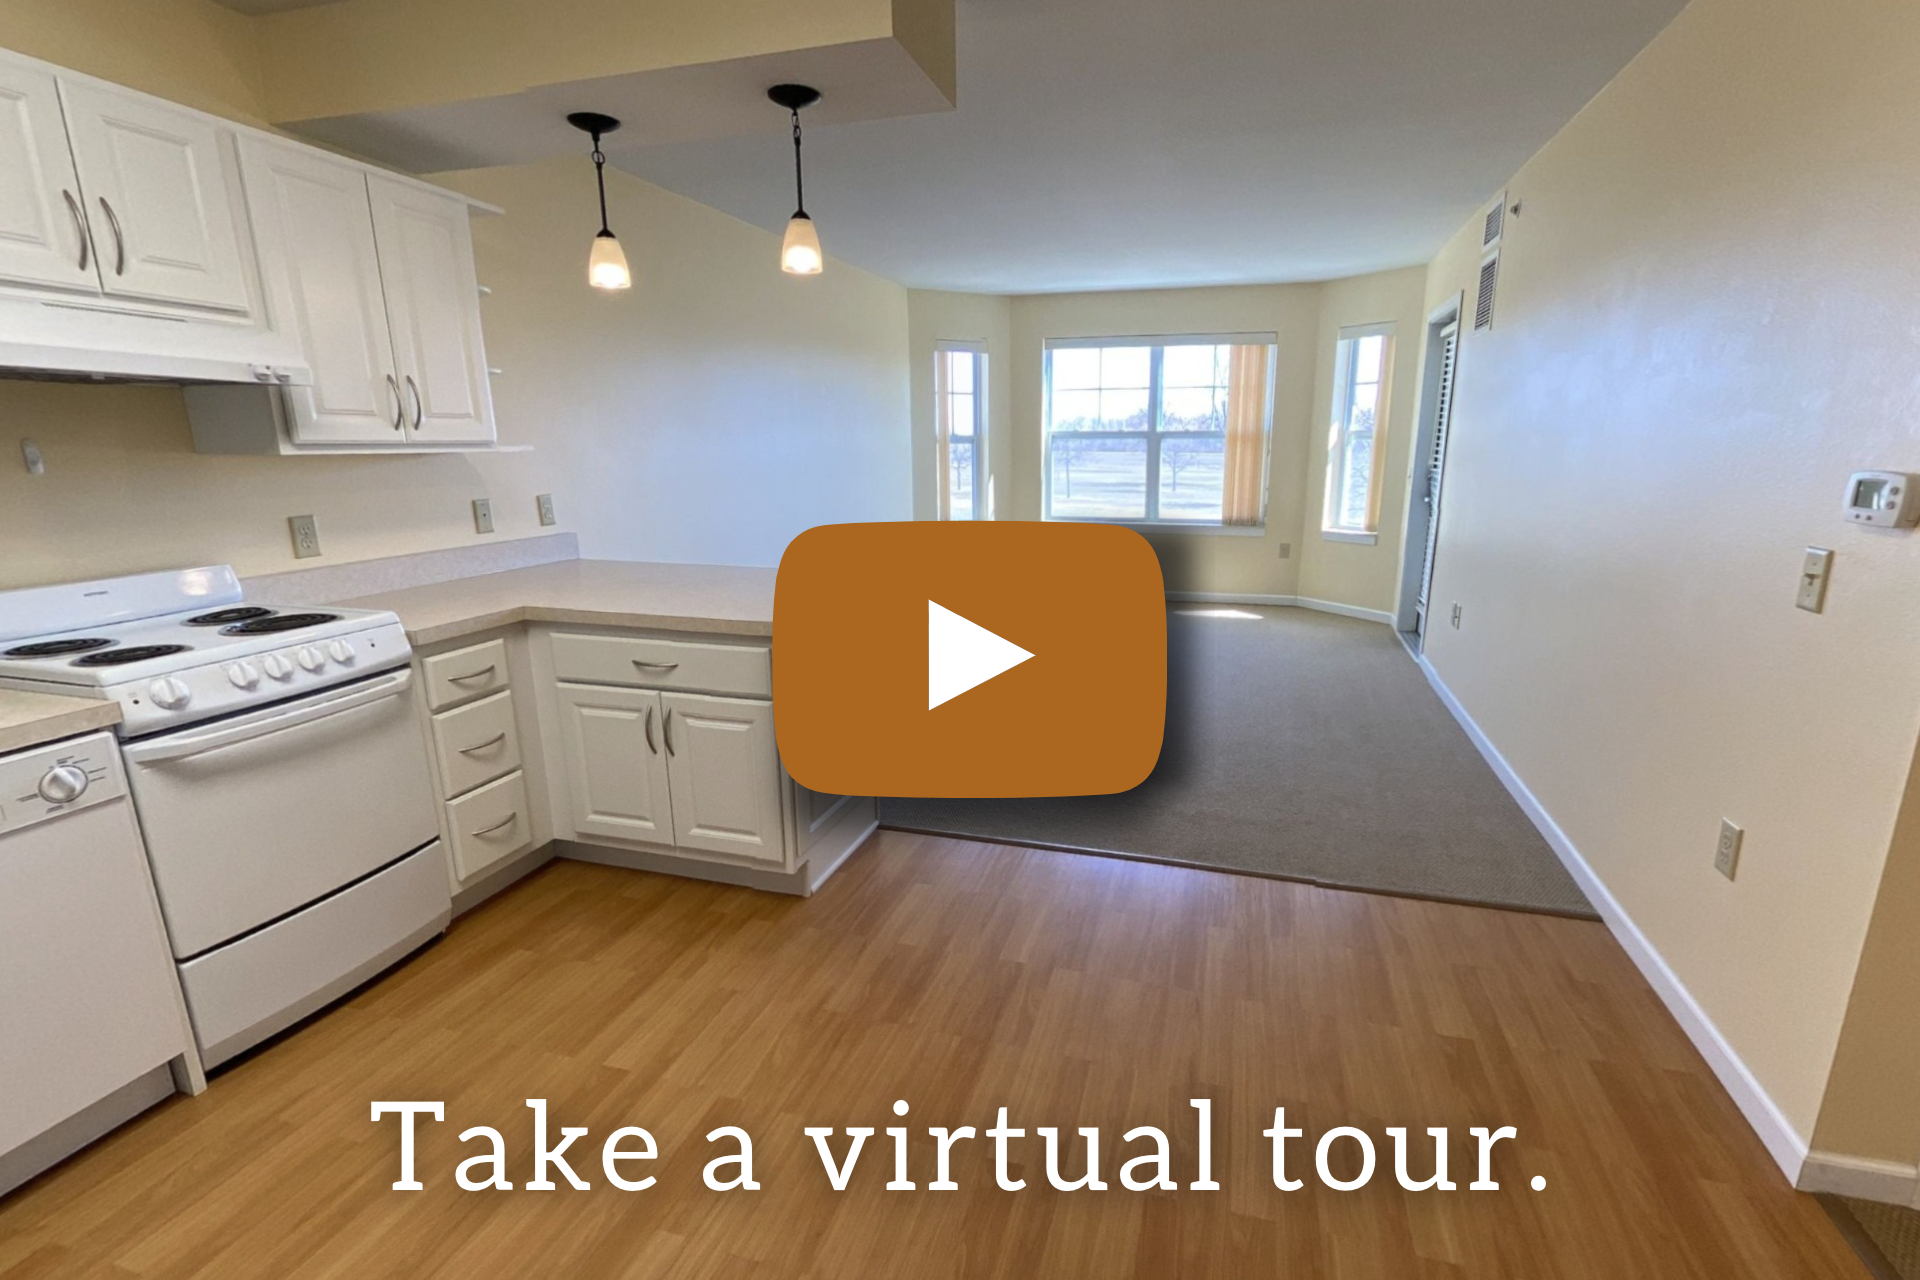 One-bedroom apartment virtual tour.